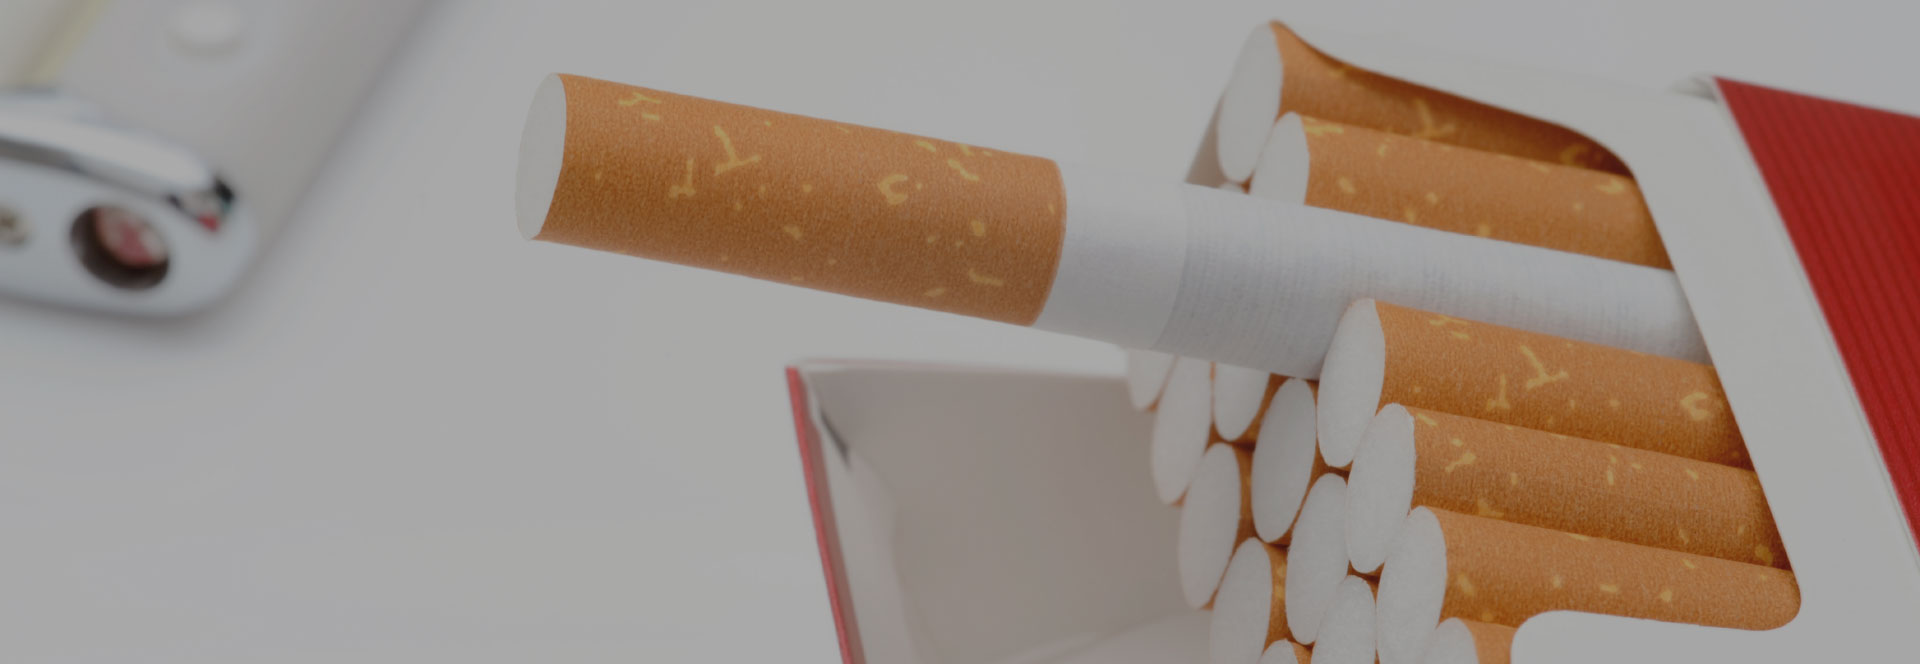 Minneapolis City Council passes tobacco ordinance that sets $15 minimum price for cigarettes